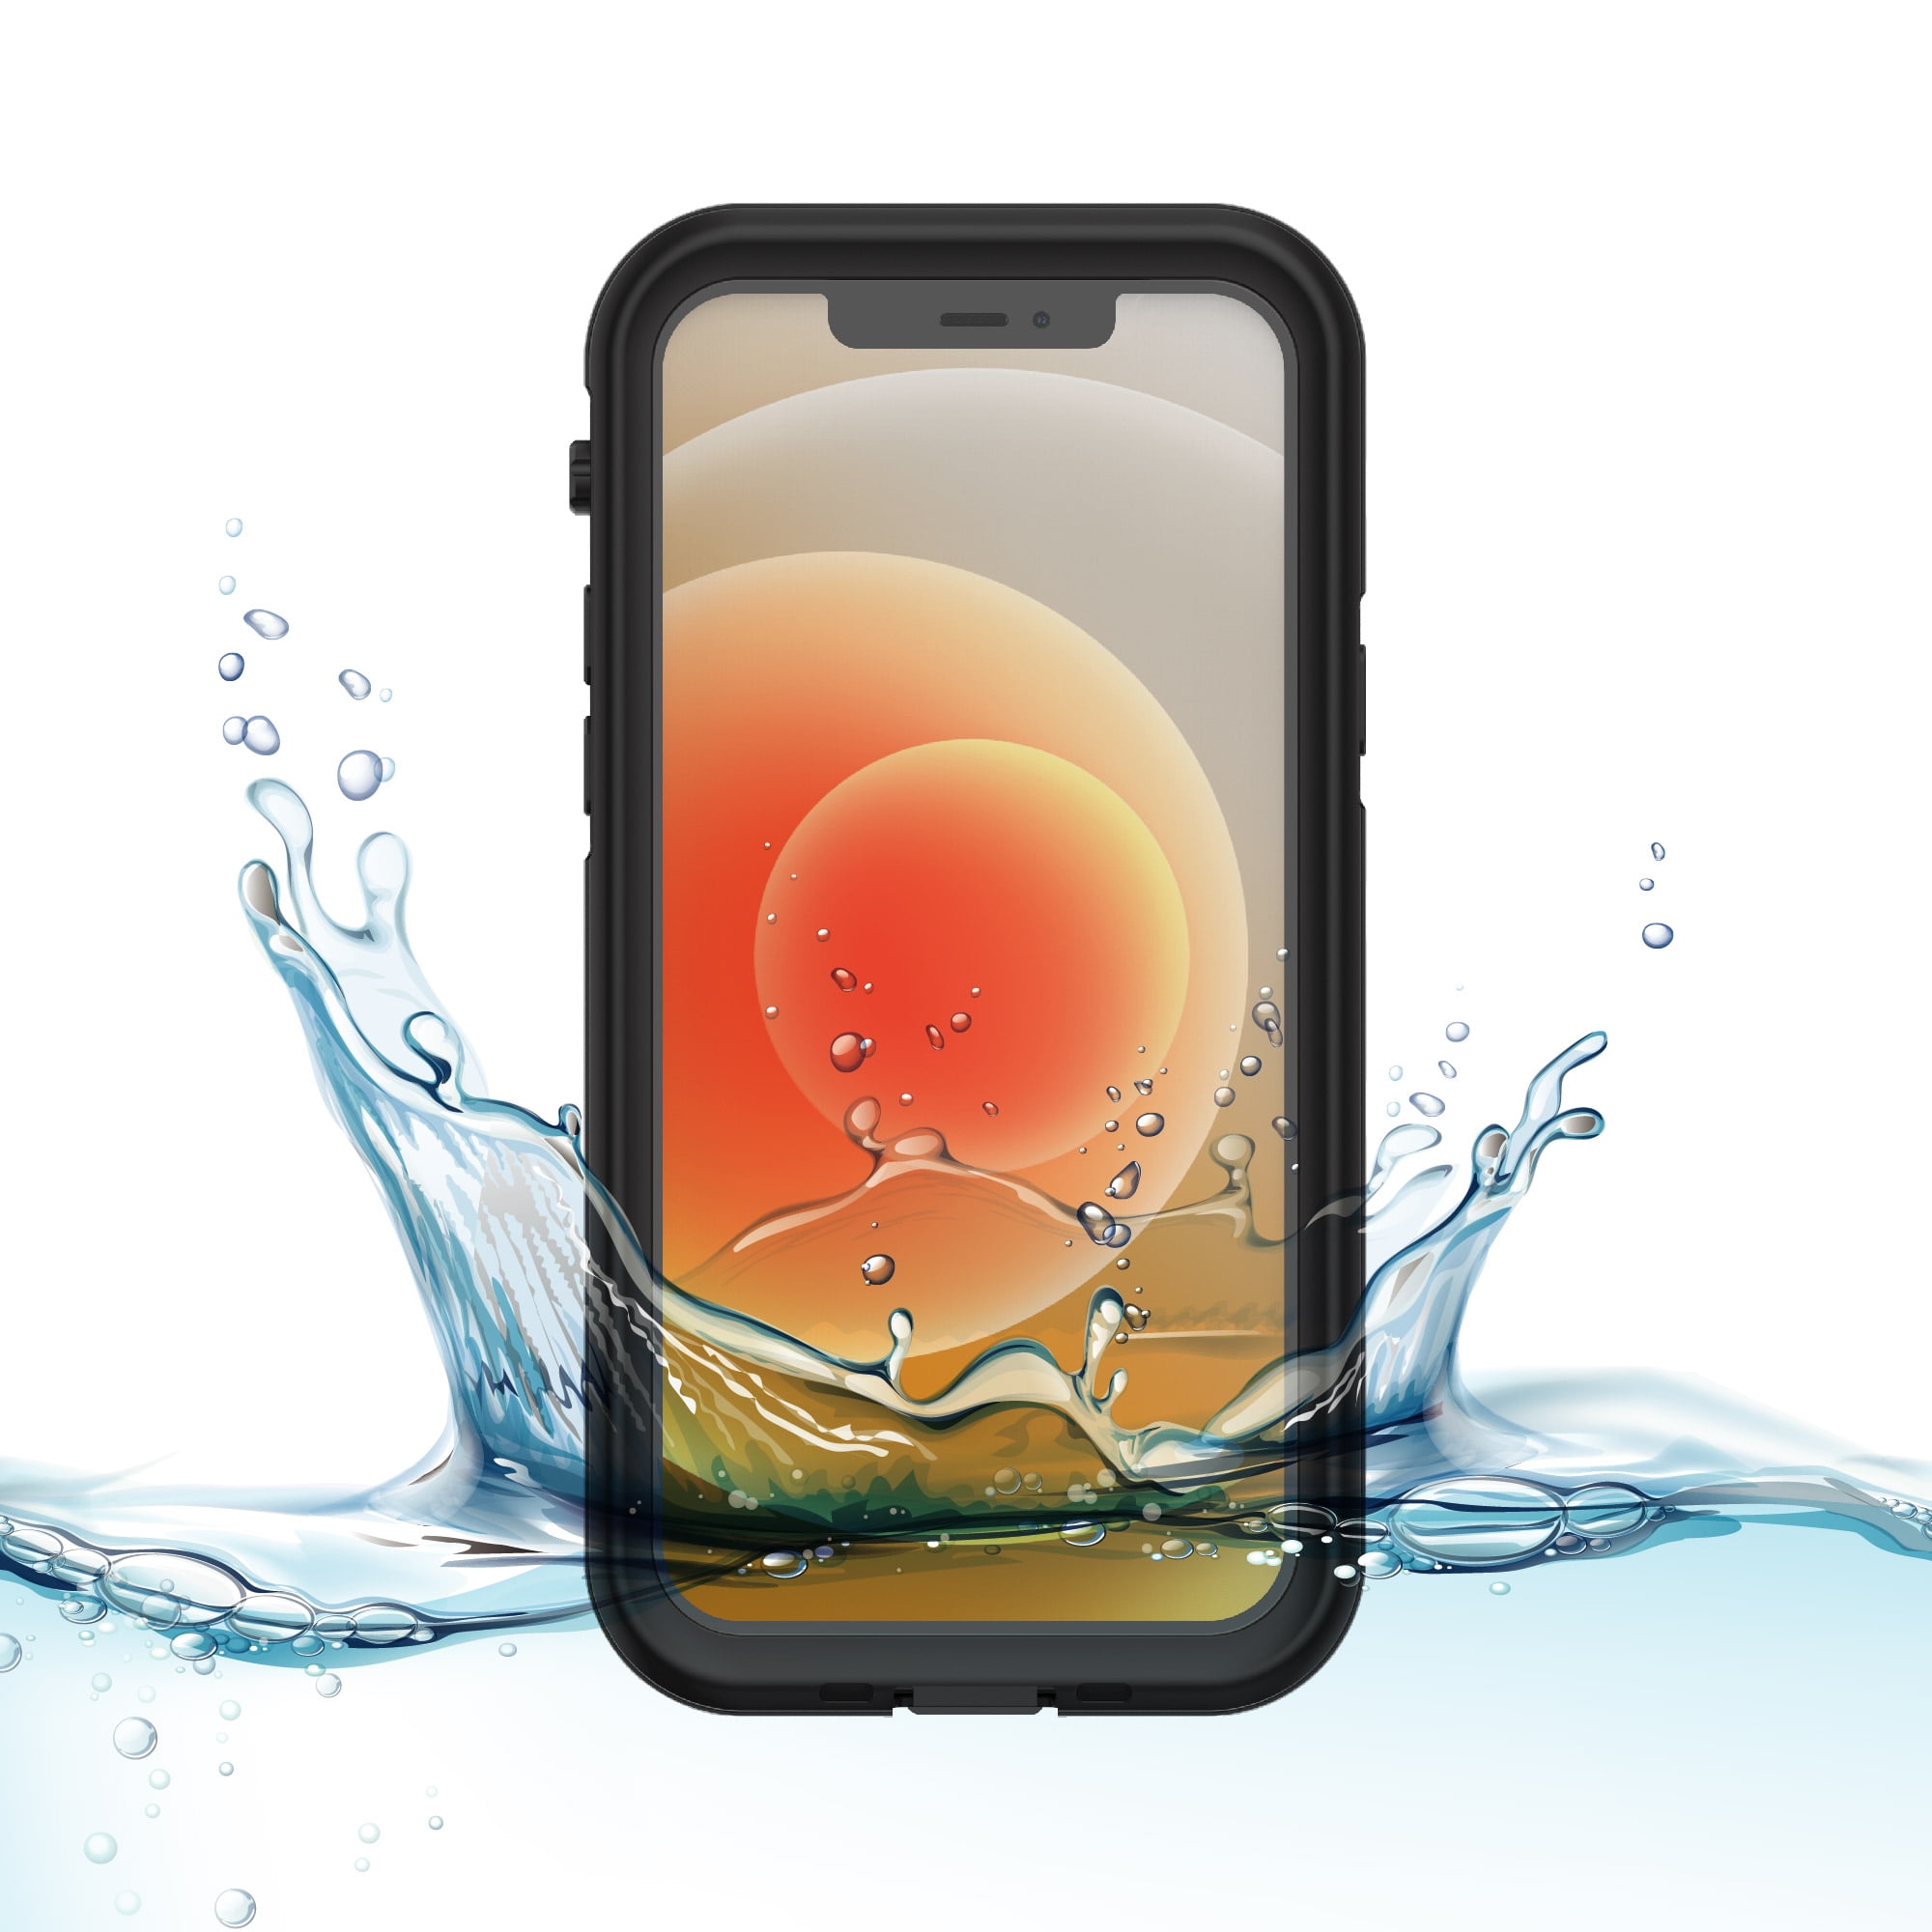 iPhone 12 Pro Max Waterproof Phone Case - Black/Clear - Body Glove